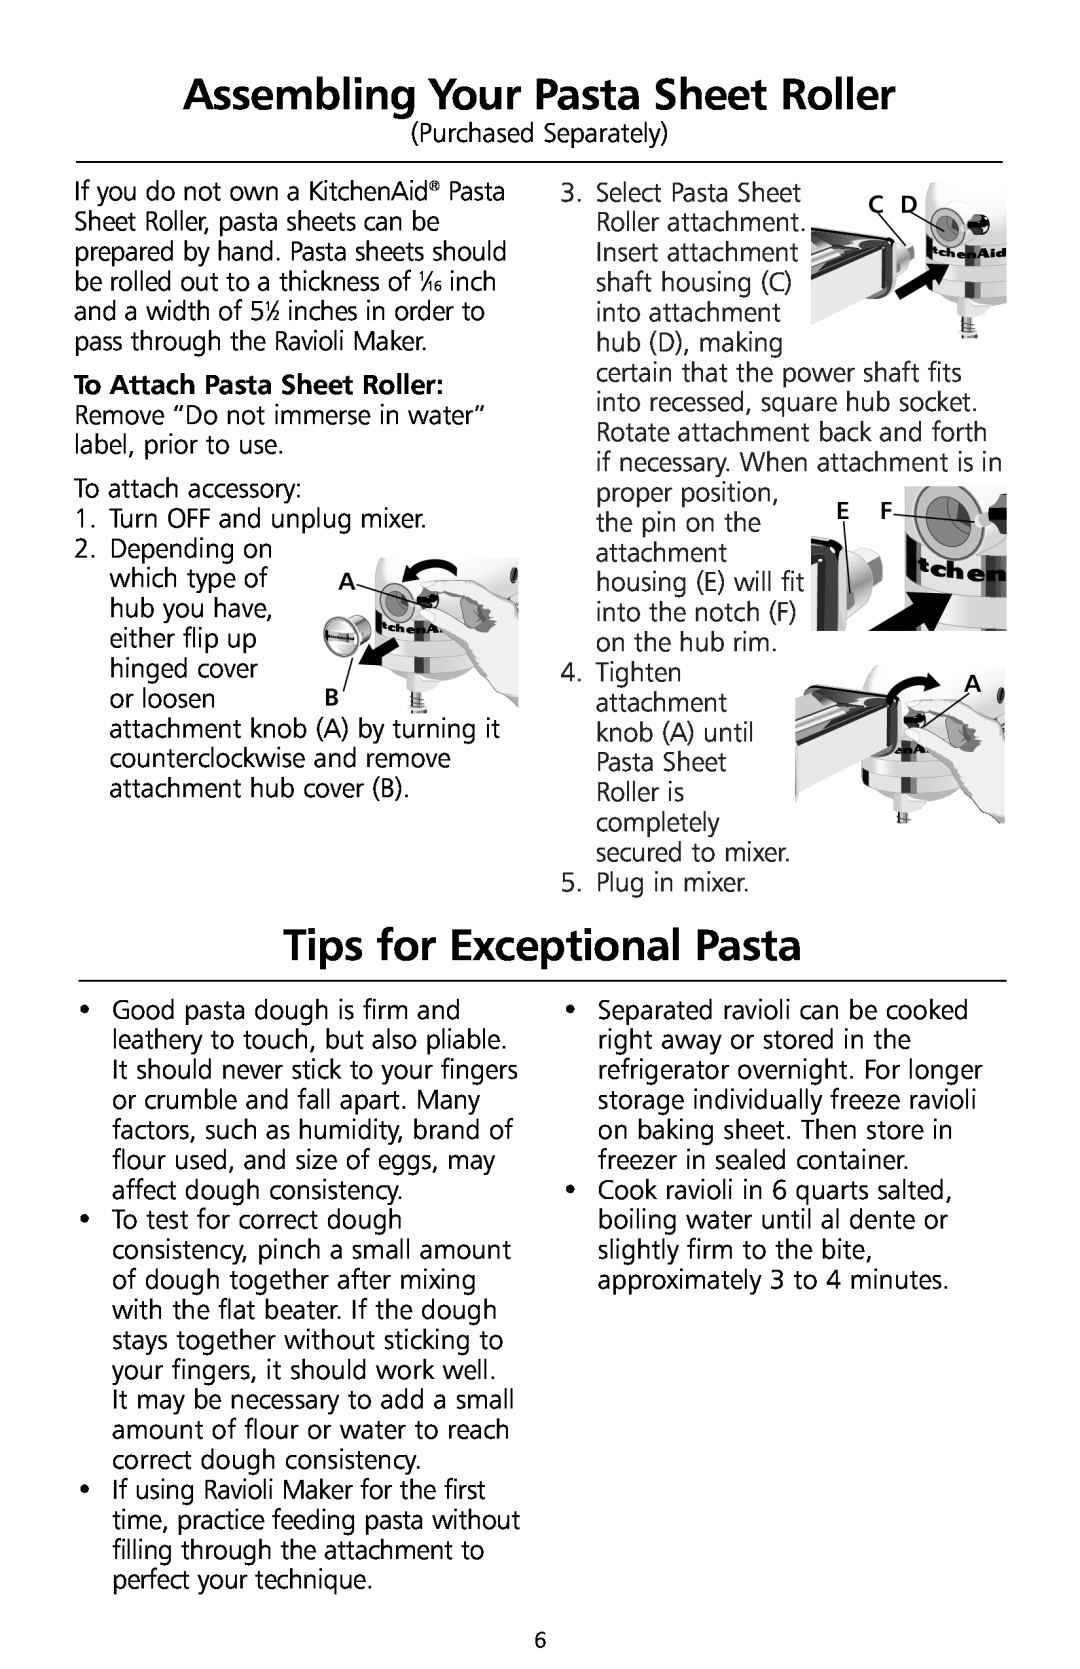 KitchenAid Model KRAV manual Assembling Your Pasta Sheet Roller, Tips for Exceptional Pasta 